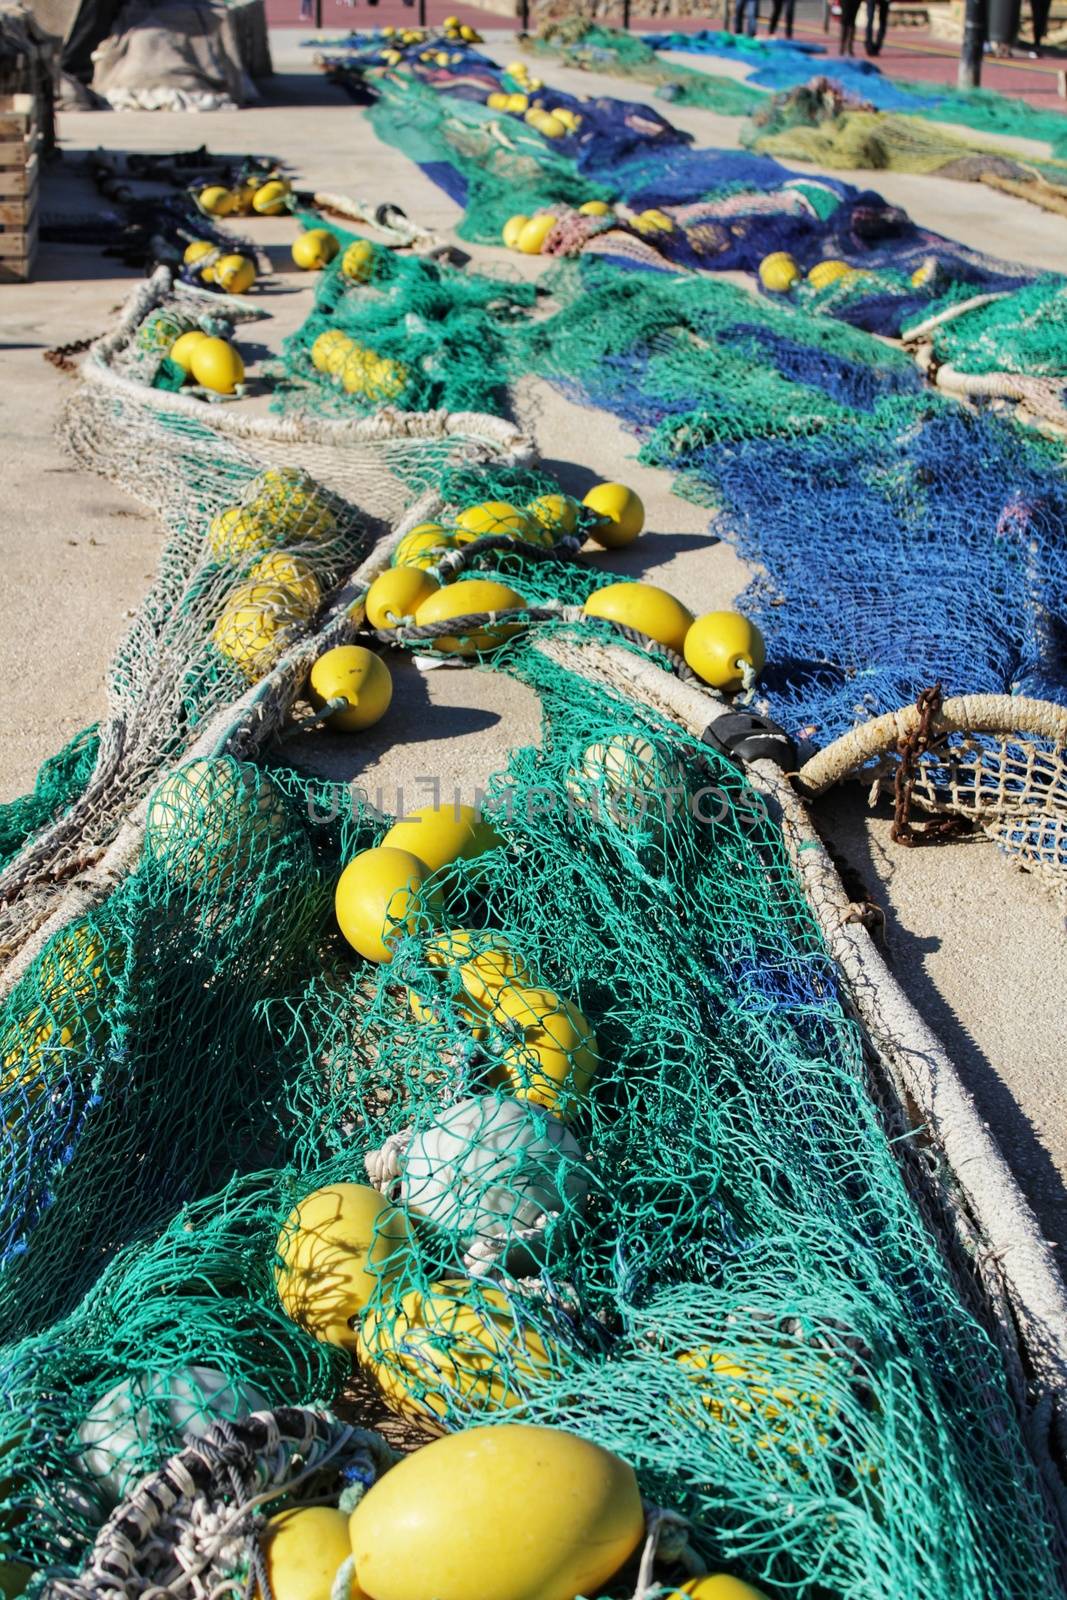 Fishing nets in the port of Santa Pola, Alicante-Spain